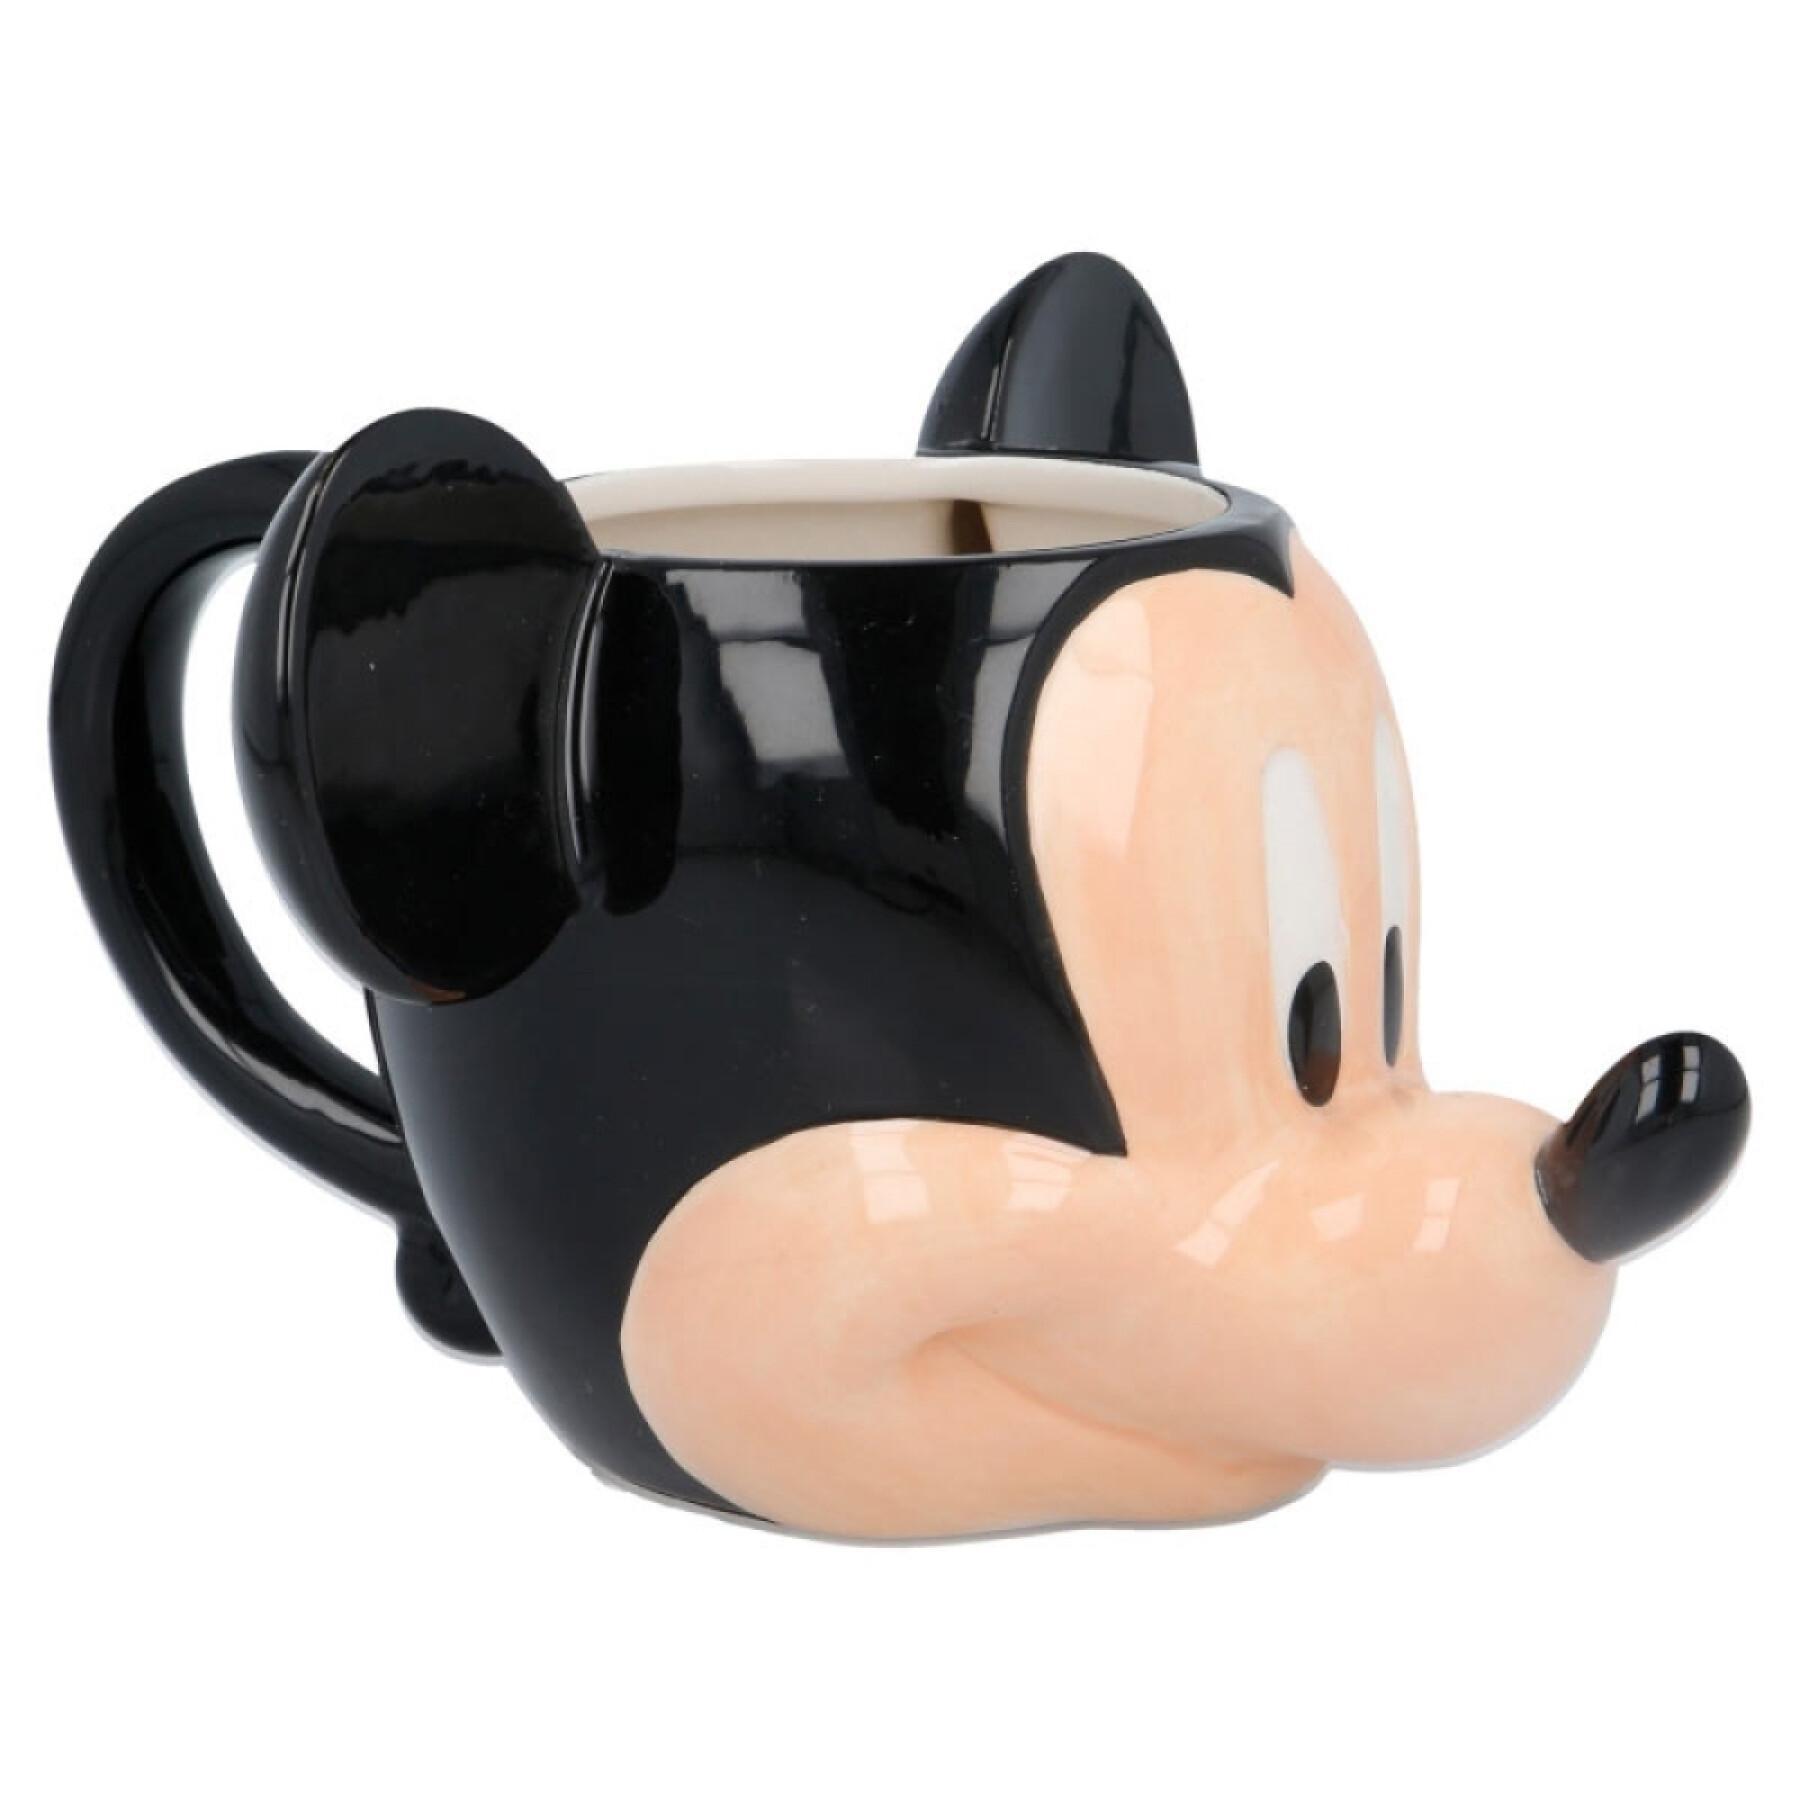 Tazza in ceramica Disney Mickey